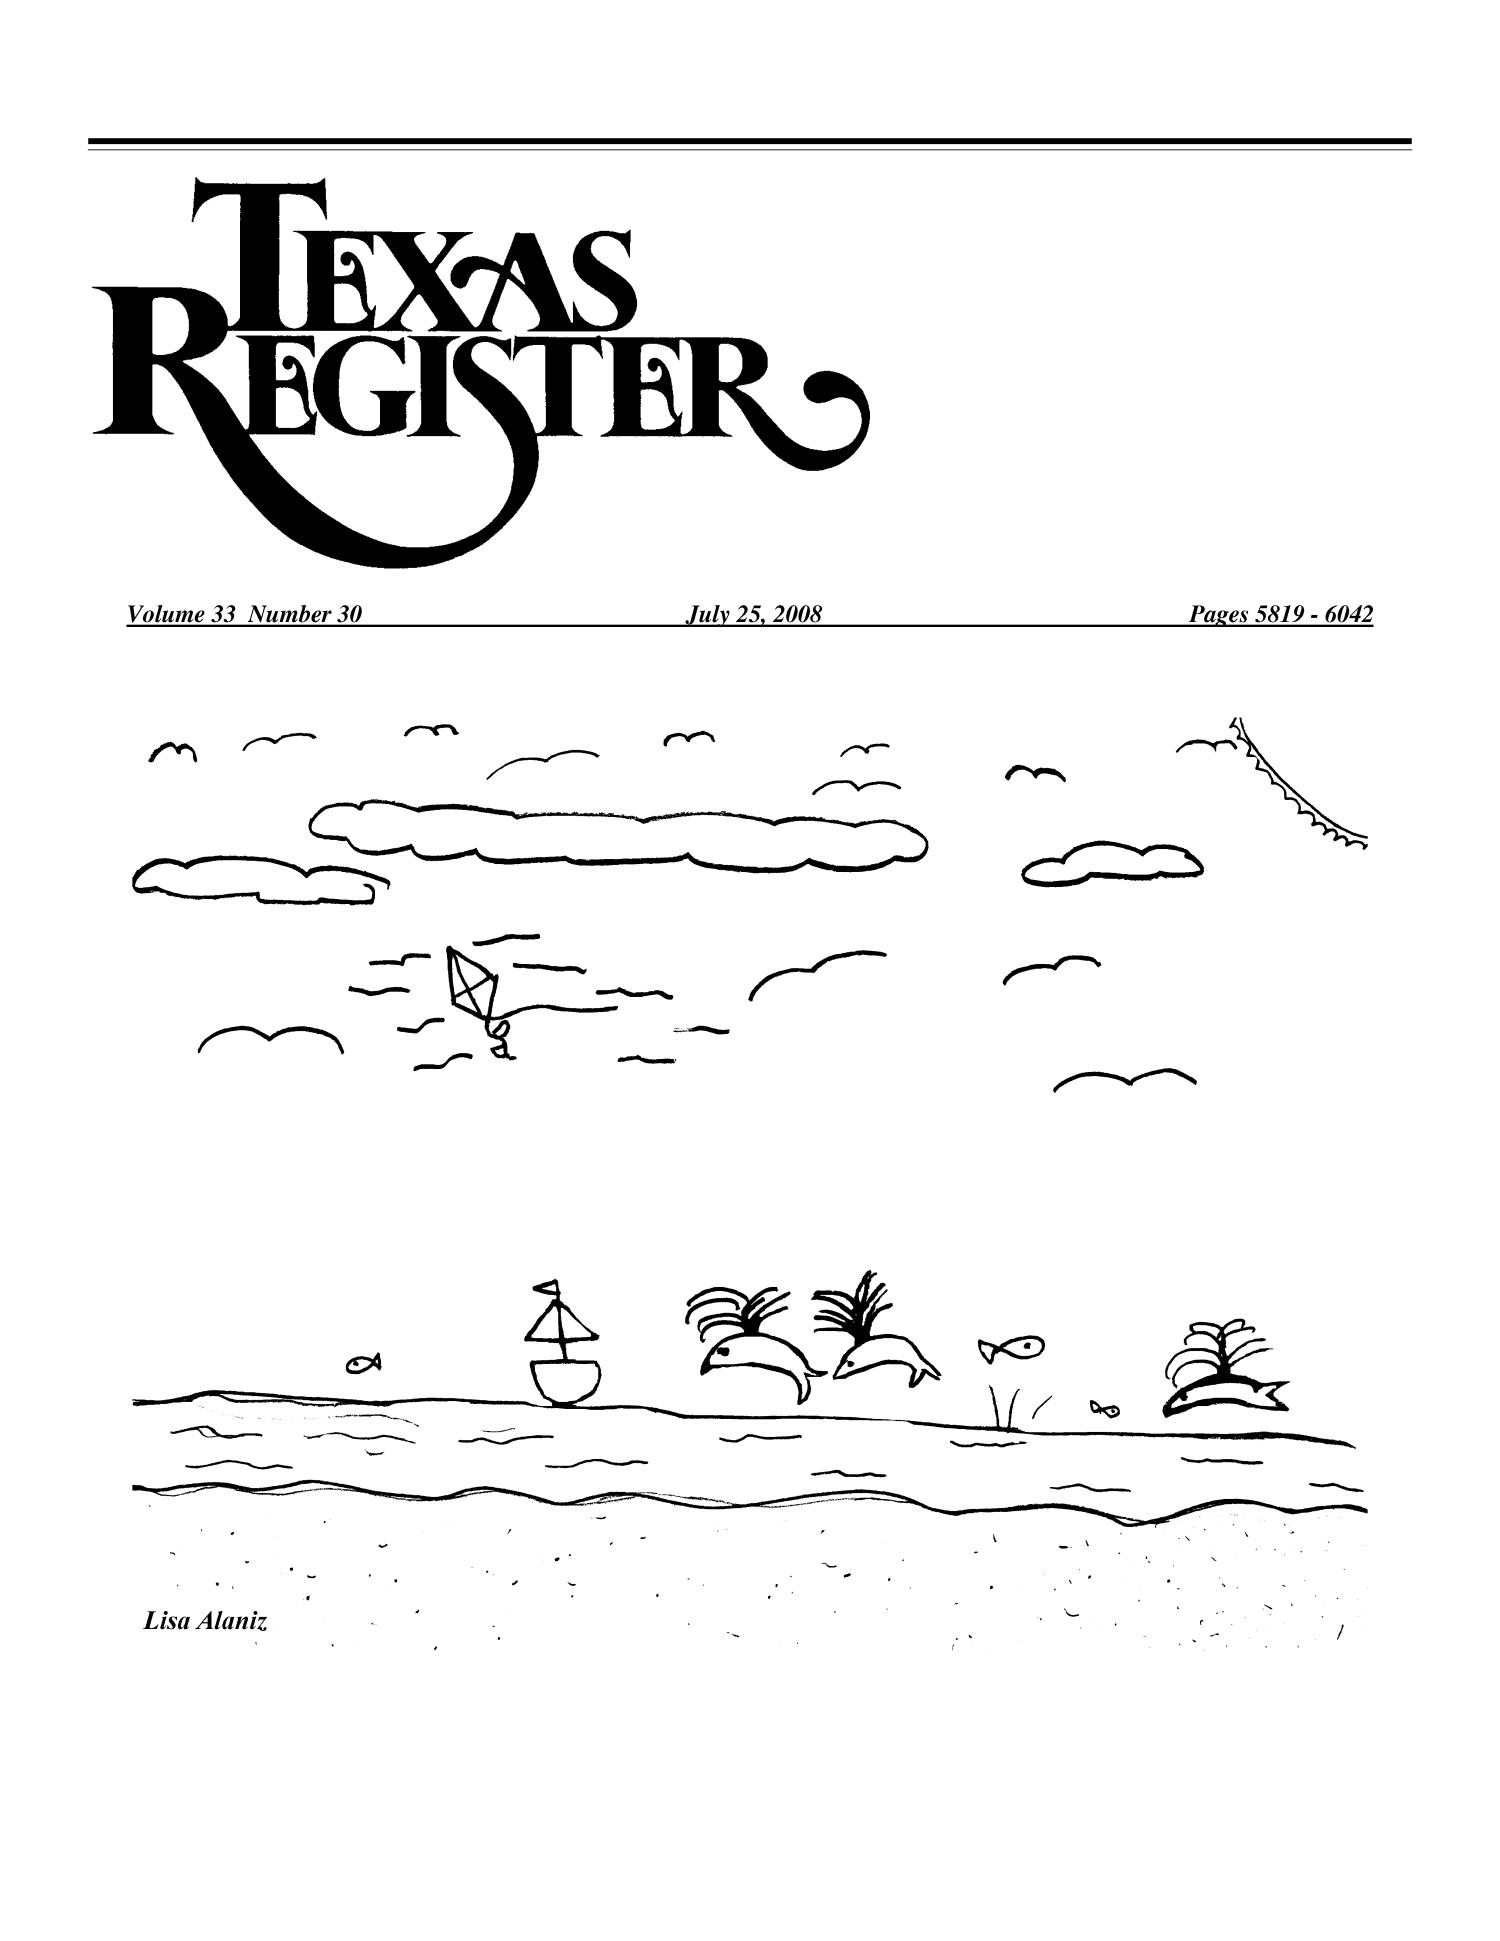 Texas Register, Volume 33, Number 30, Pages 5819-6042, July 25, 2008
                                                
                                                    5819
                                                